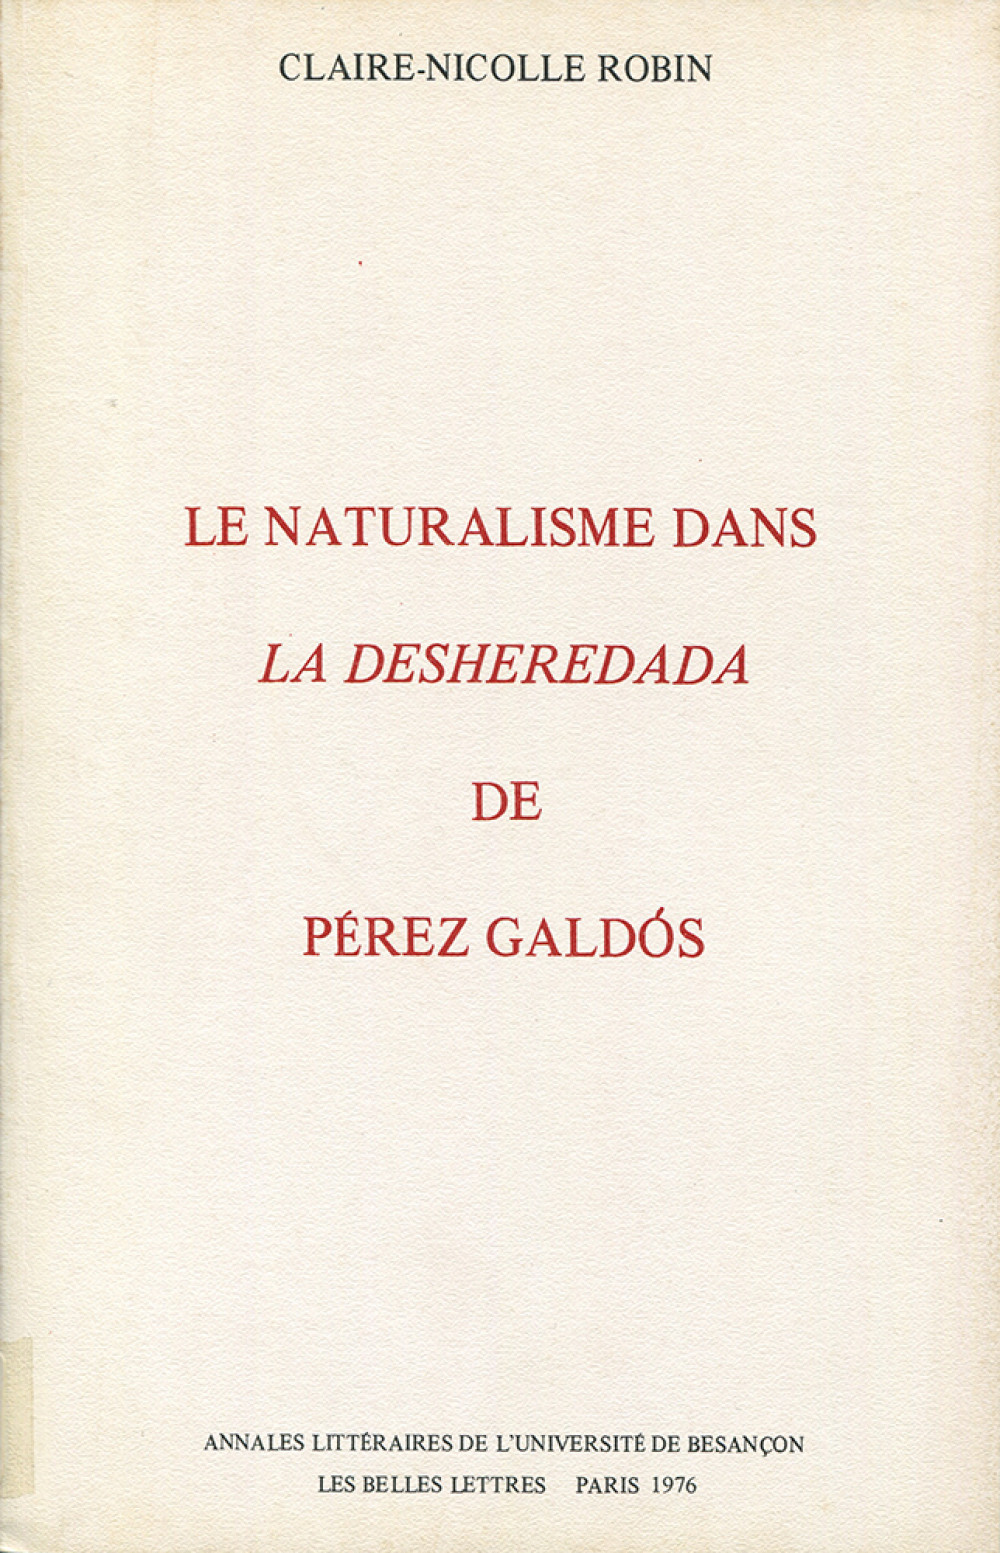 Le naturalisme dans la Desheredada de Perez Galdoz